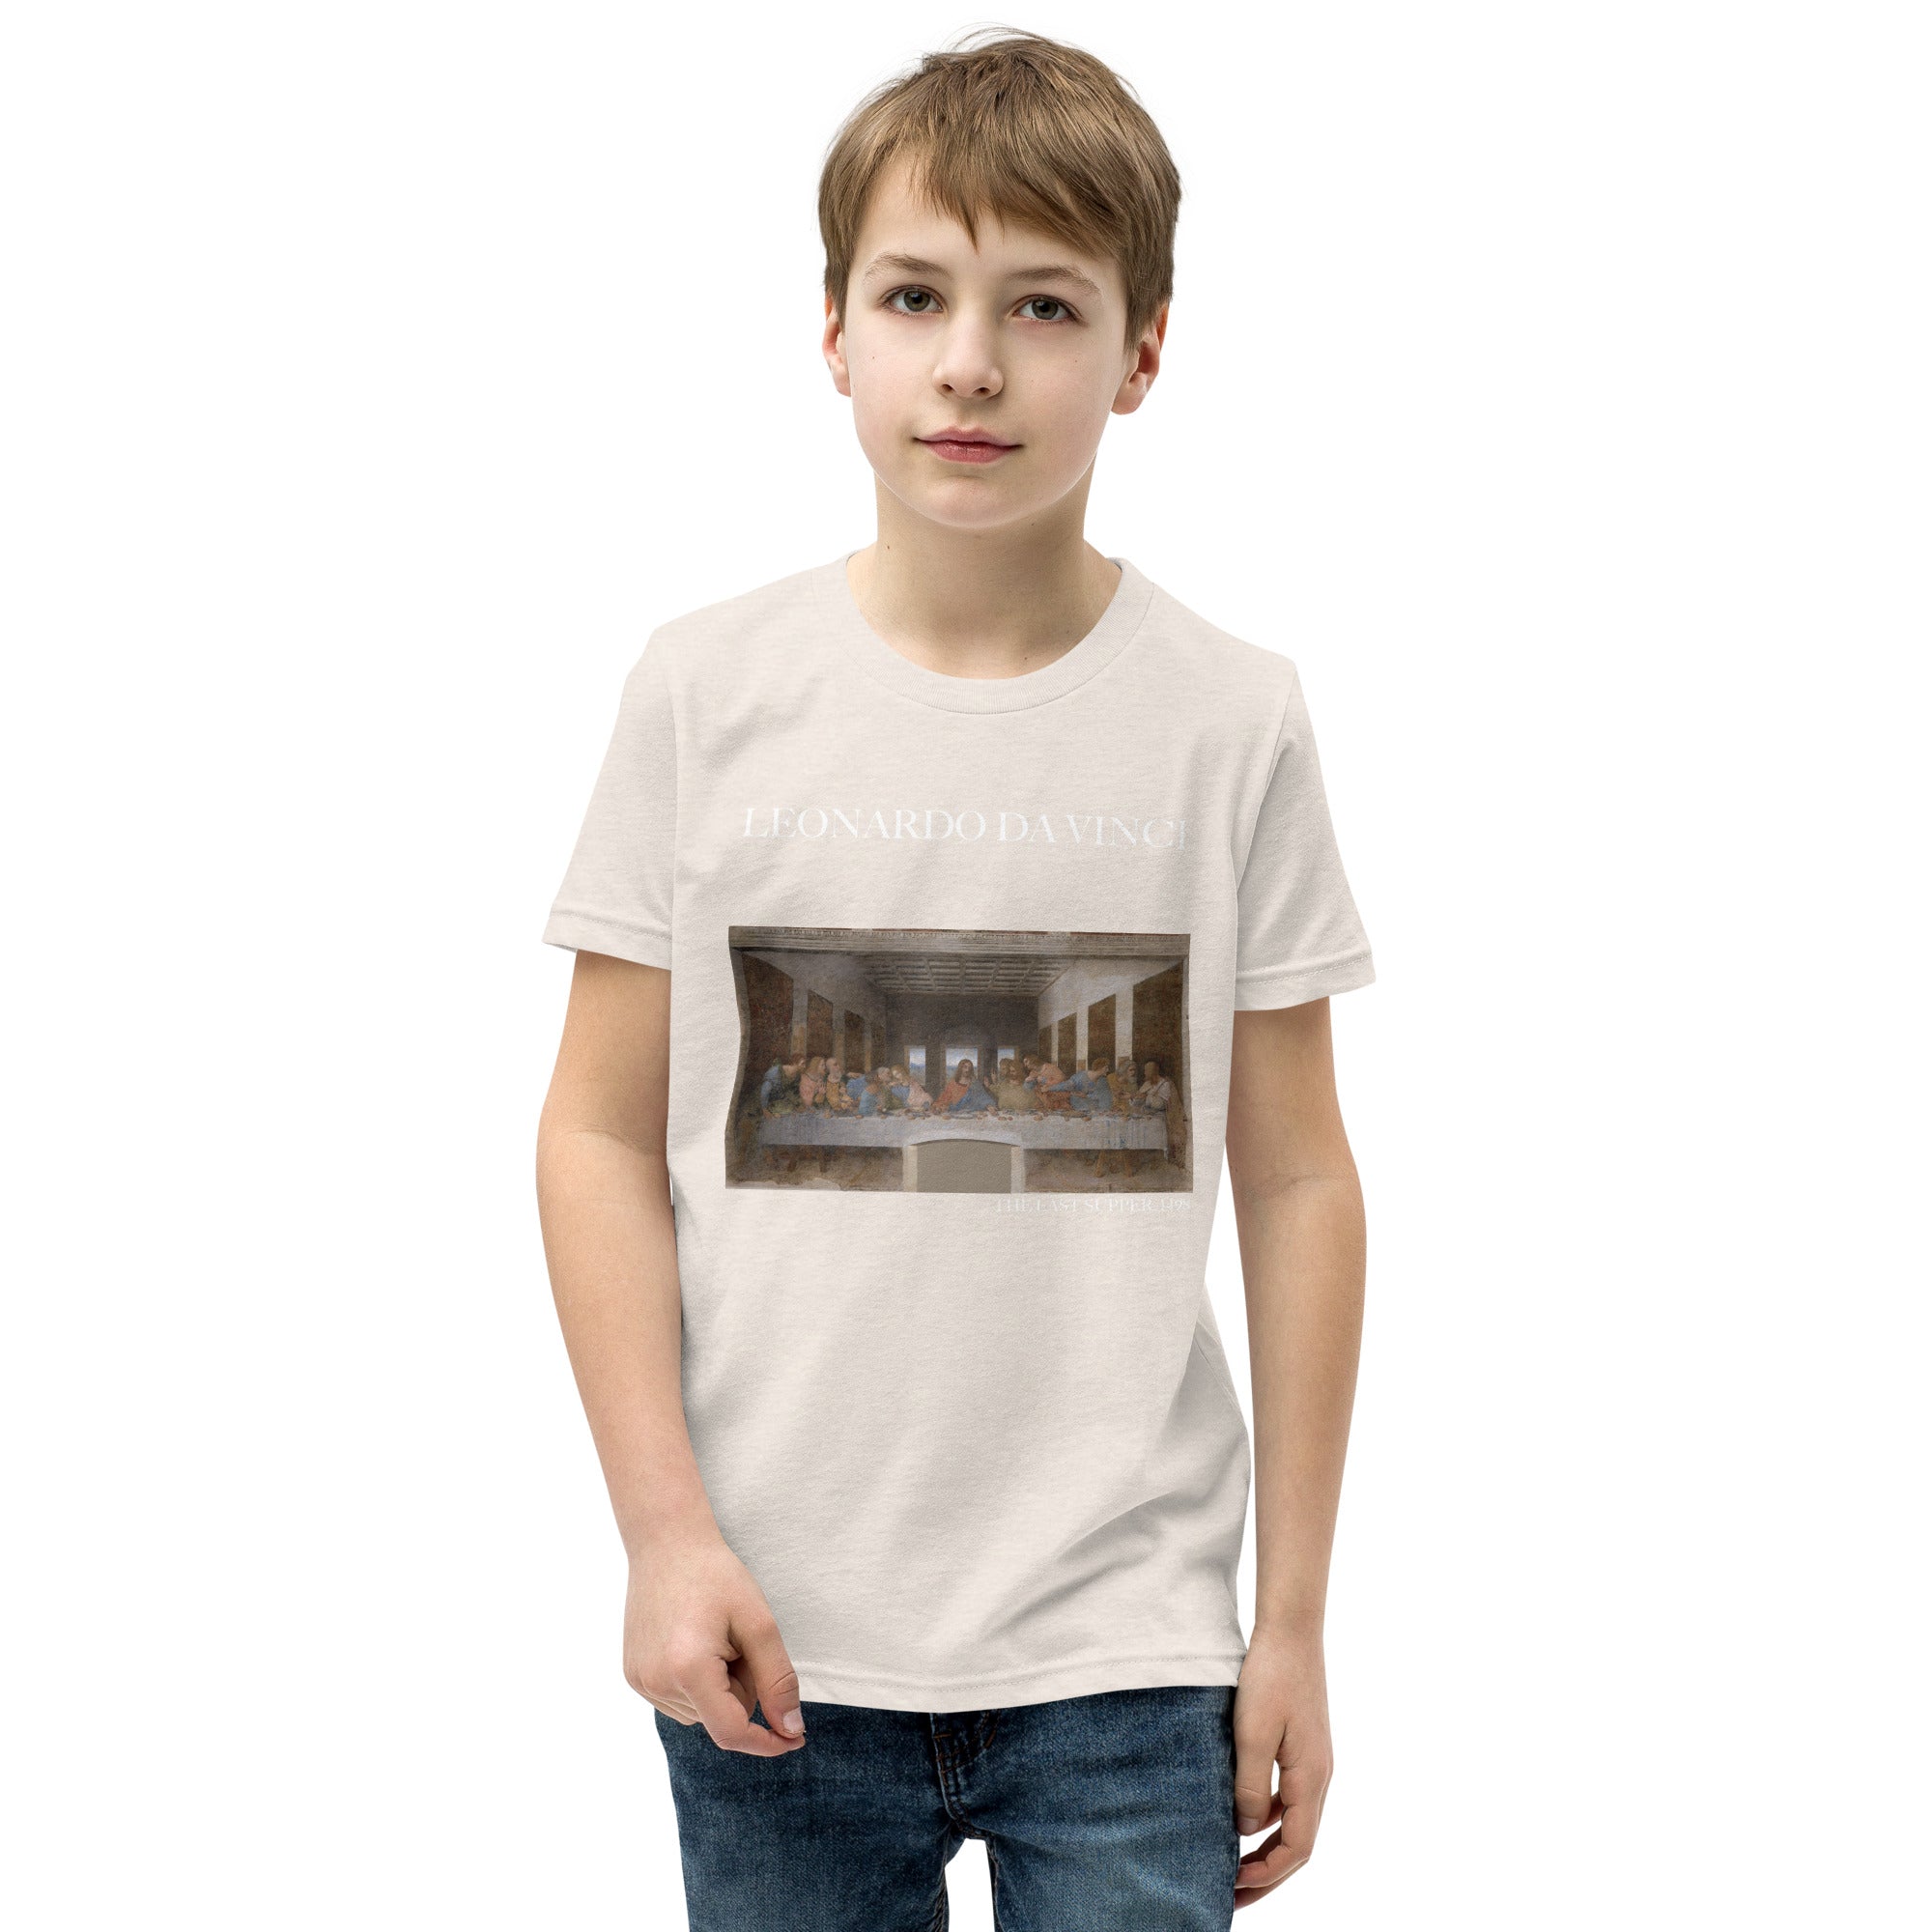 Leonardo da Vinci 'The Last Supper' Famous Painting Short Sleeve T-Shirt | Premium Youth Art Tee